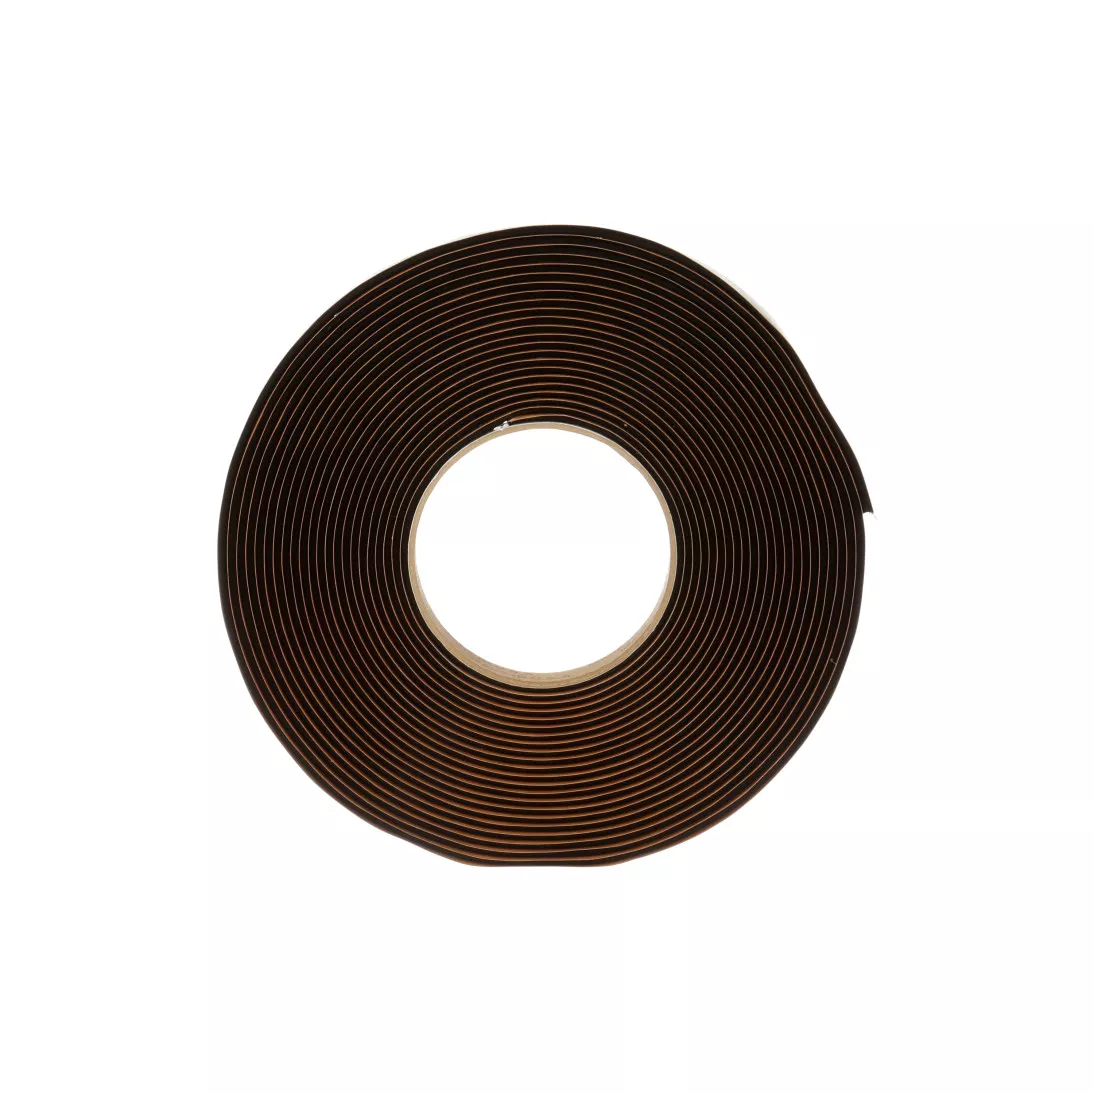 3M™ Windo-Weld™ Round Ribbon Sealer, 08625, 1/8 in x 1/4 in x 30 ft
Roll, 24 per case